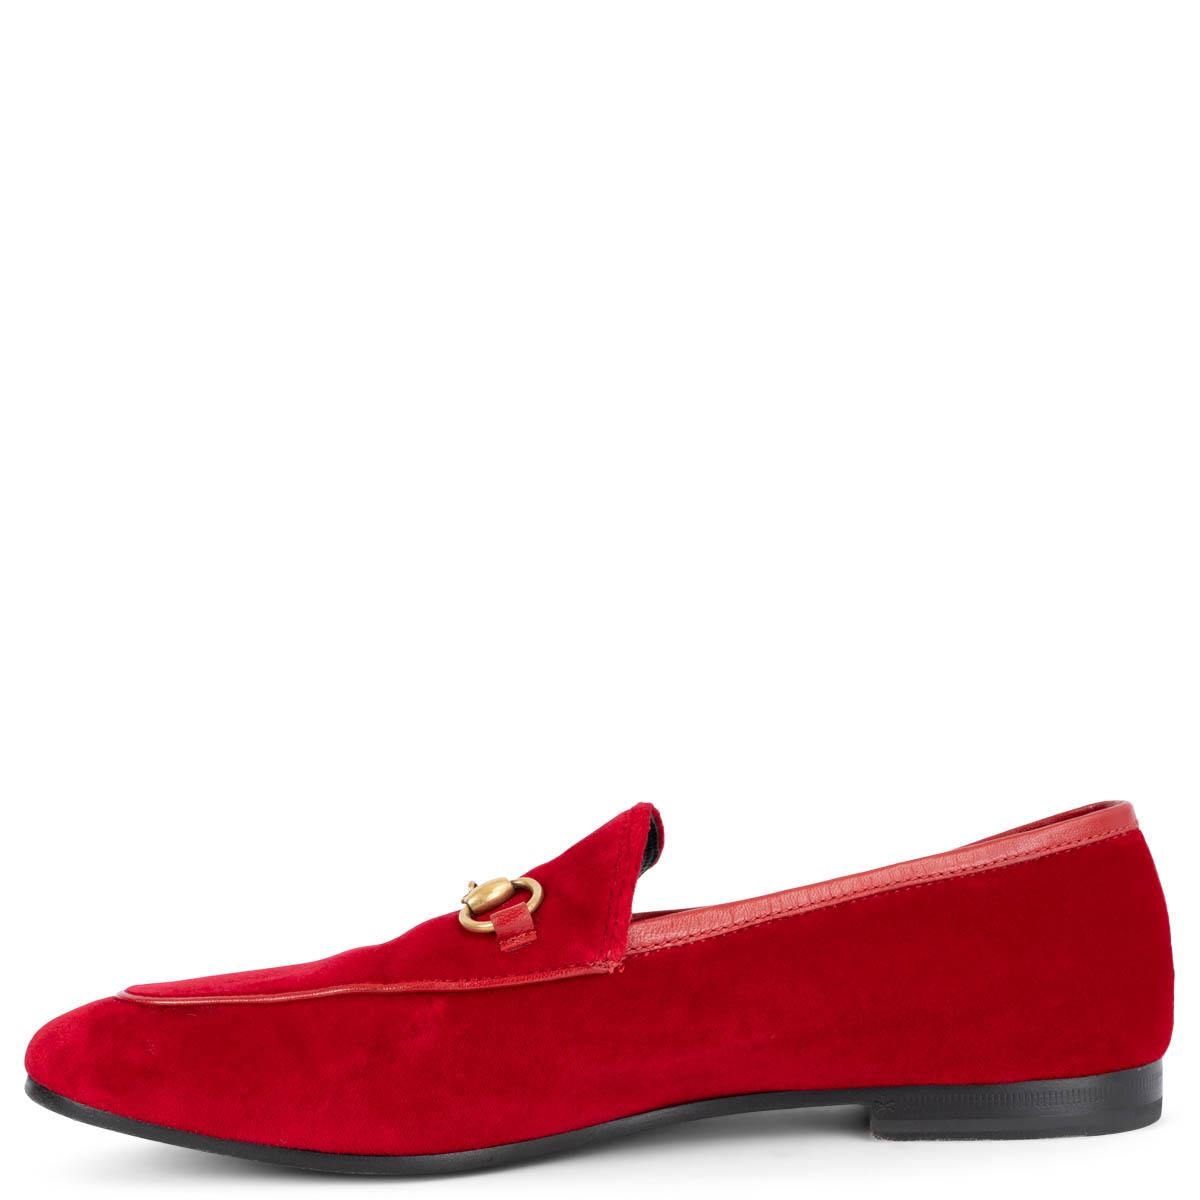 Red GUCCI red velvet JORDANN HORSEBIT Loafers Flats Shoes 38